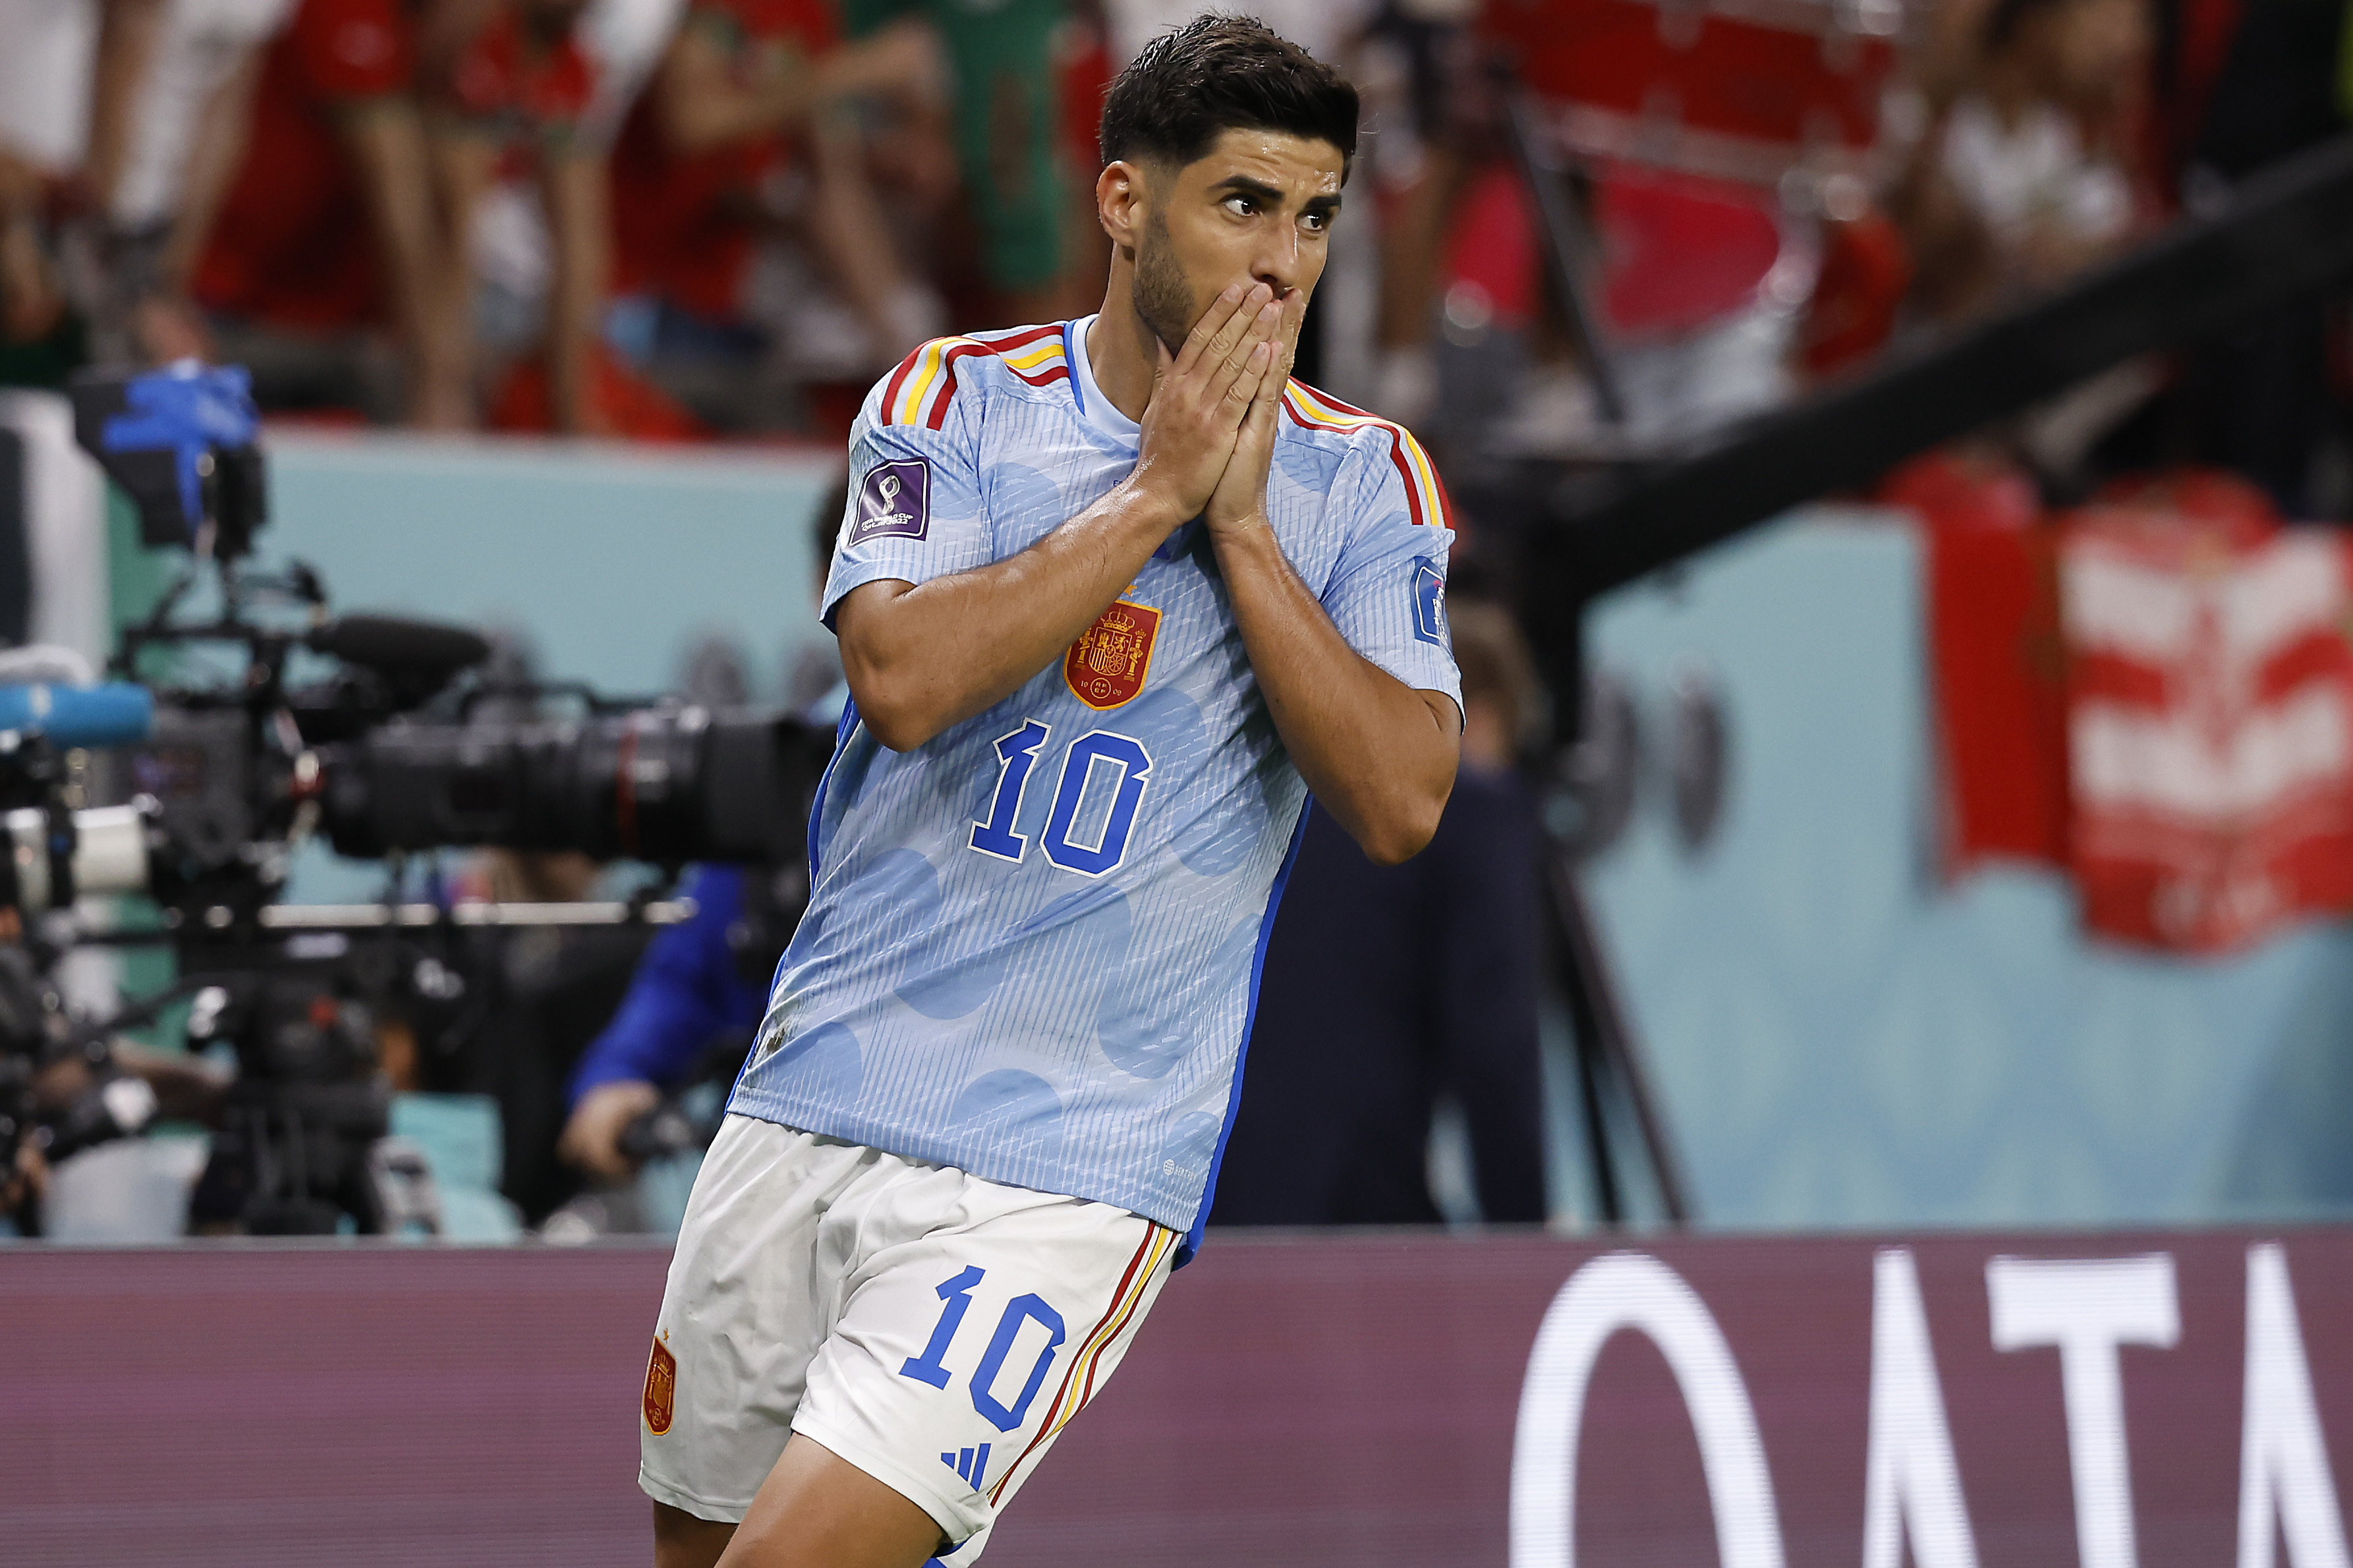 Soccer: FIFA World Cup Qatar 2022-Morocco vs Spain